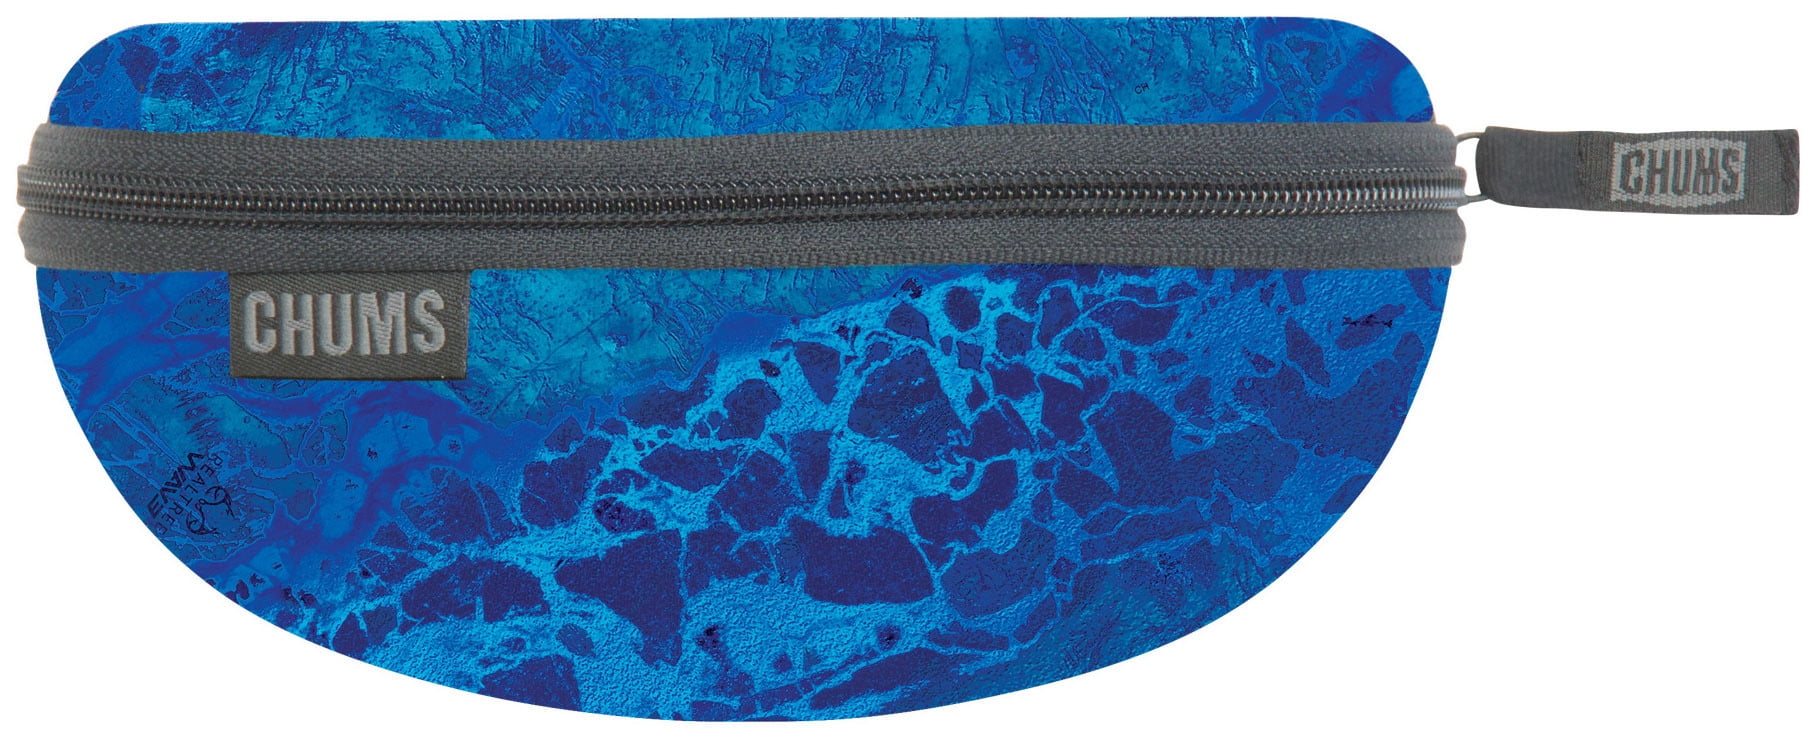 Chums Transporter Eyewear Case Blue Realtree WAV3 Pattern